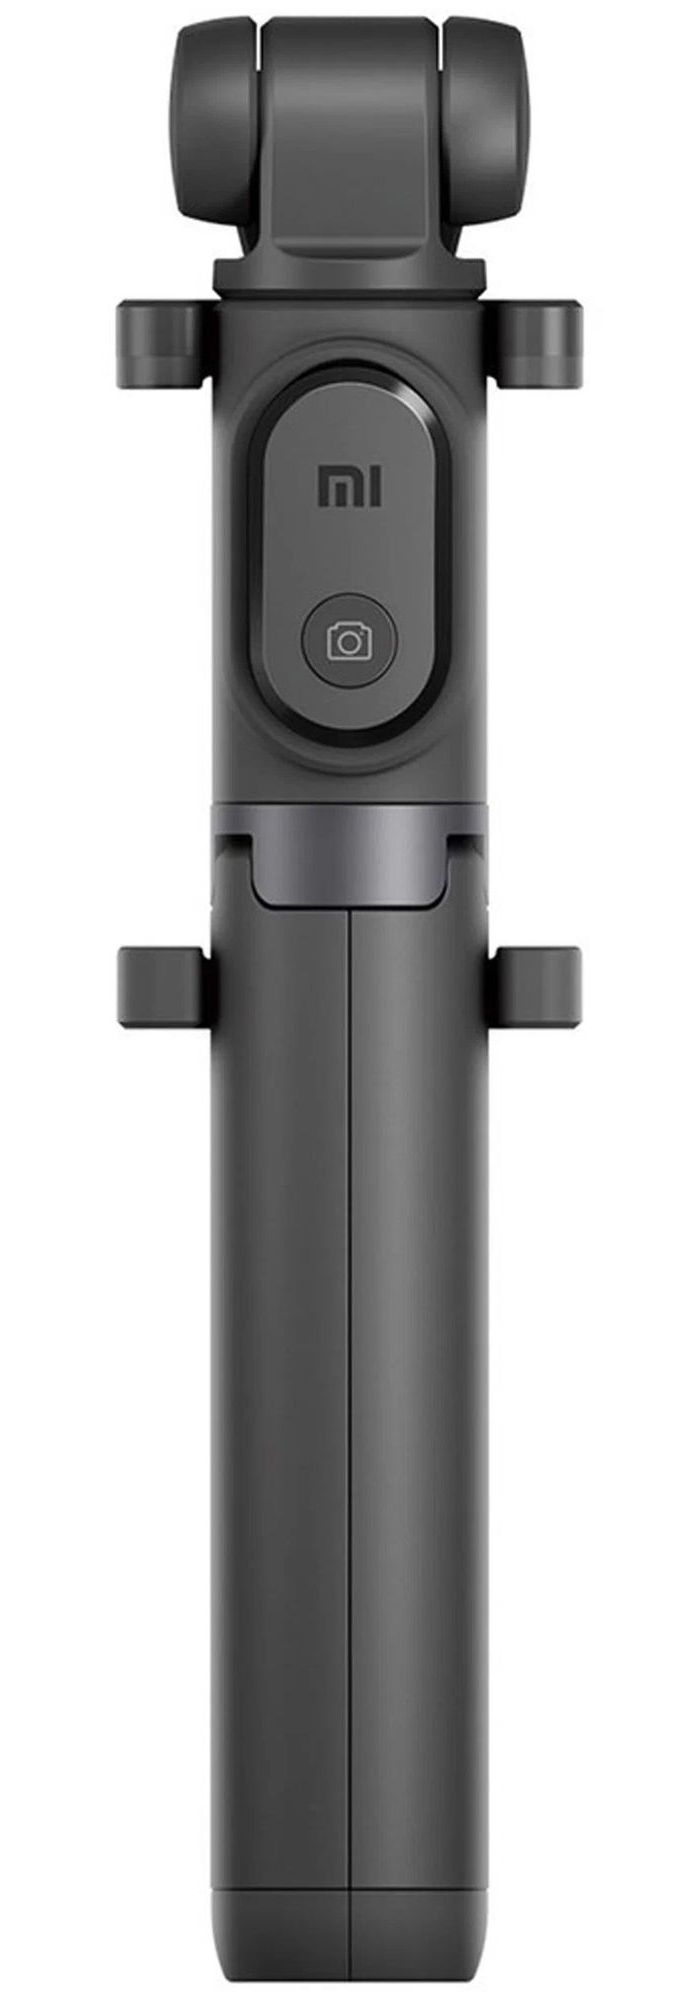 Монопод Xiaomi Mi Selfie Stick Tripod Black (XMZPG01YM) монопод xiaomi mi bluetooth zoom selfie stick tripod xmzpg05